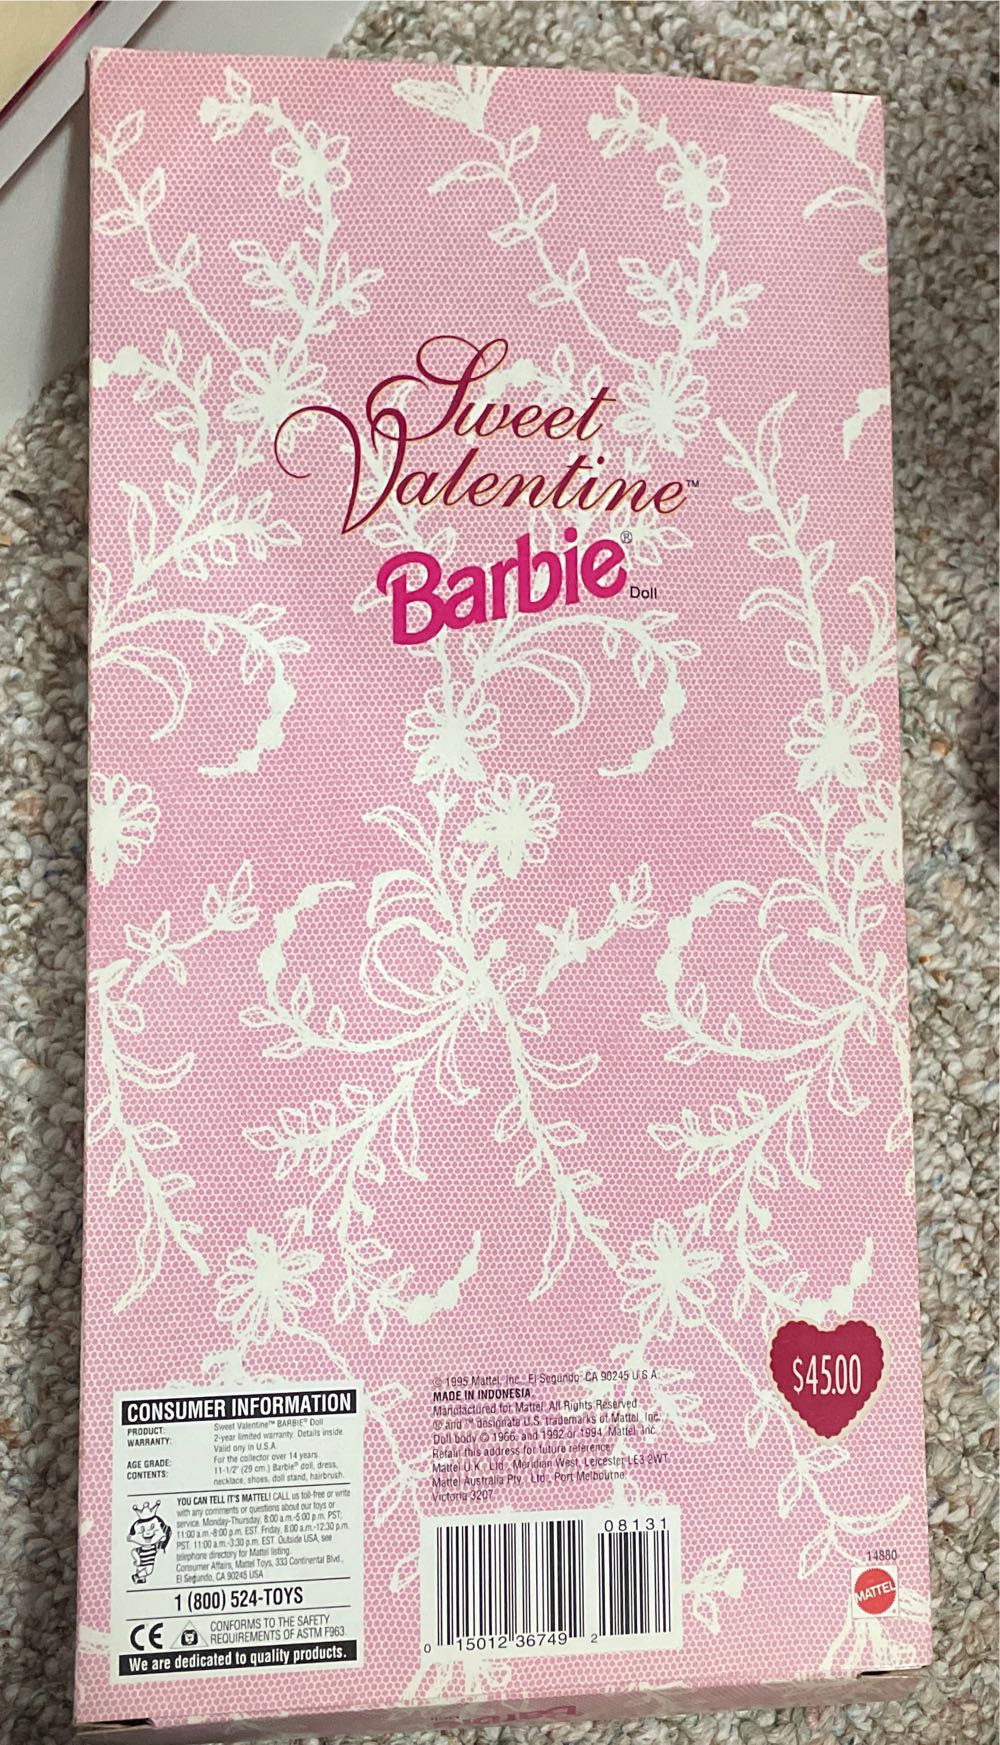 Sweet Valentine Barbie - Hallmark doll collectible [Barcode 015012367492] - Main Image 3